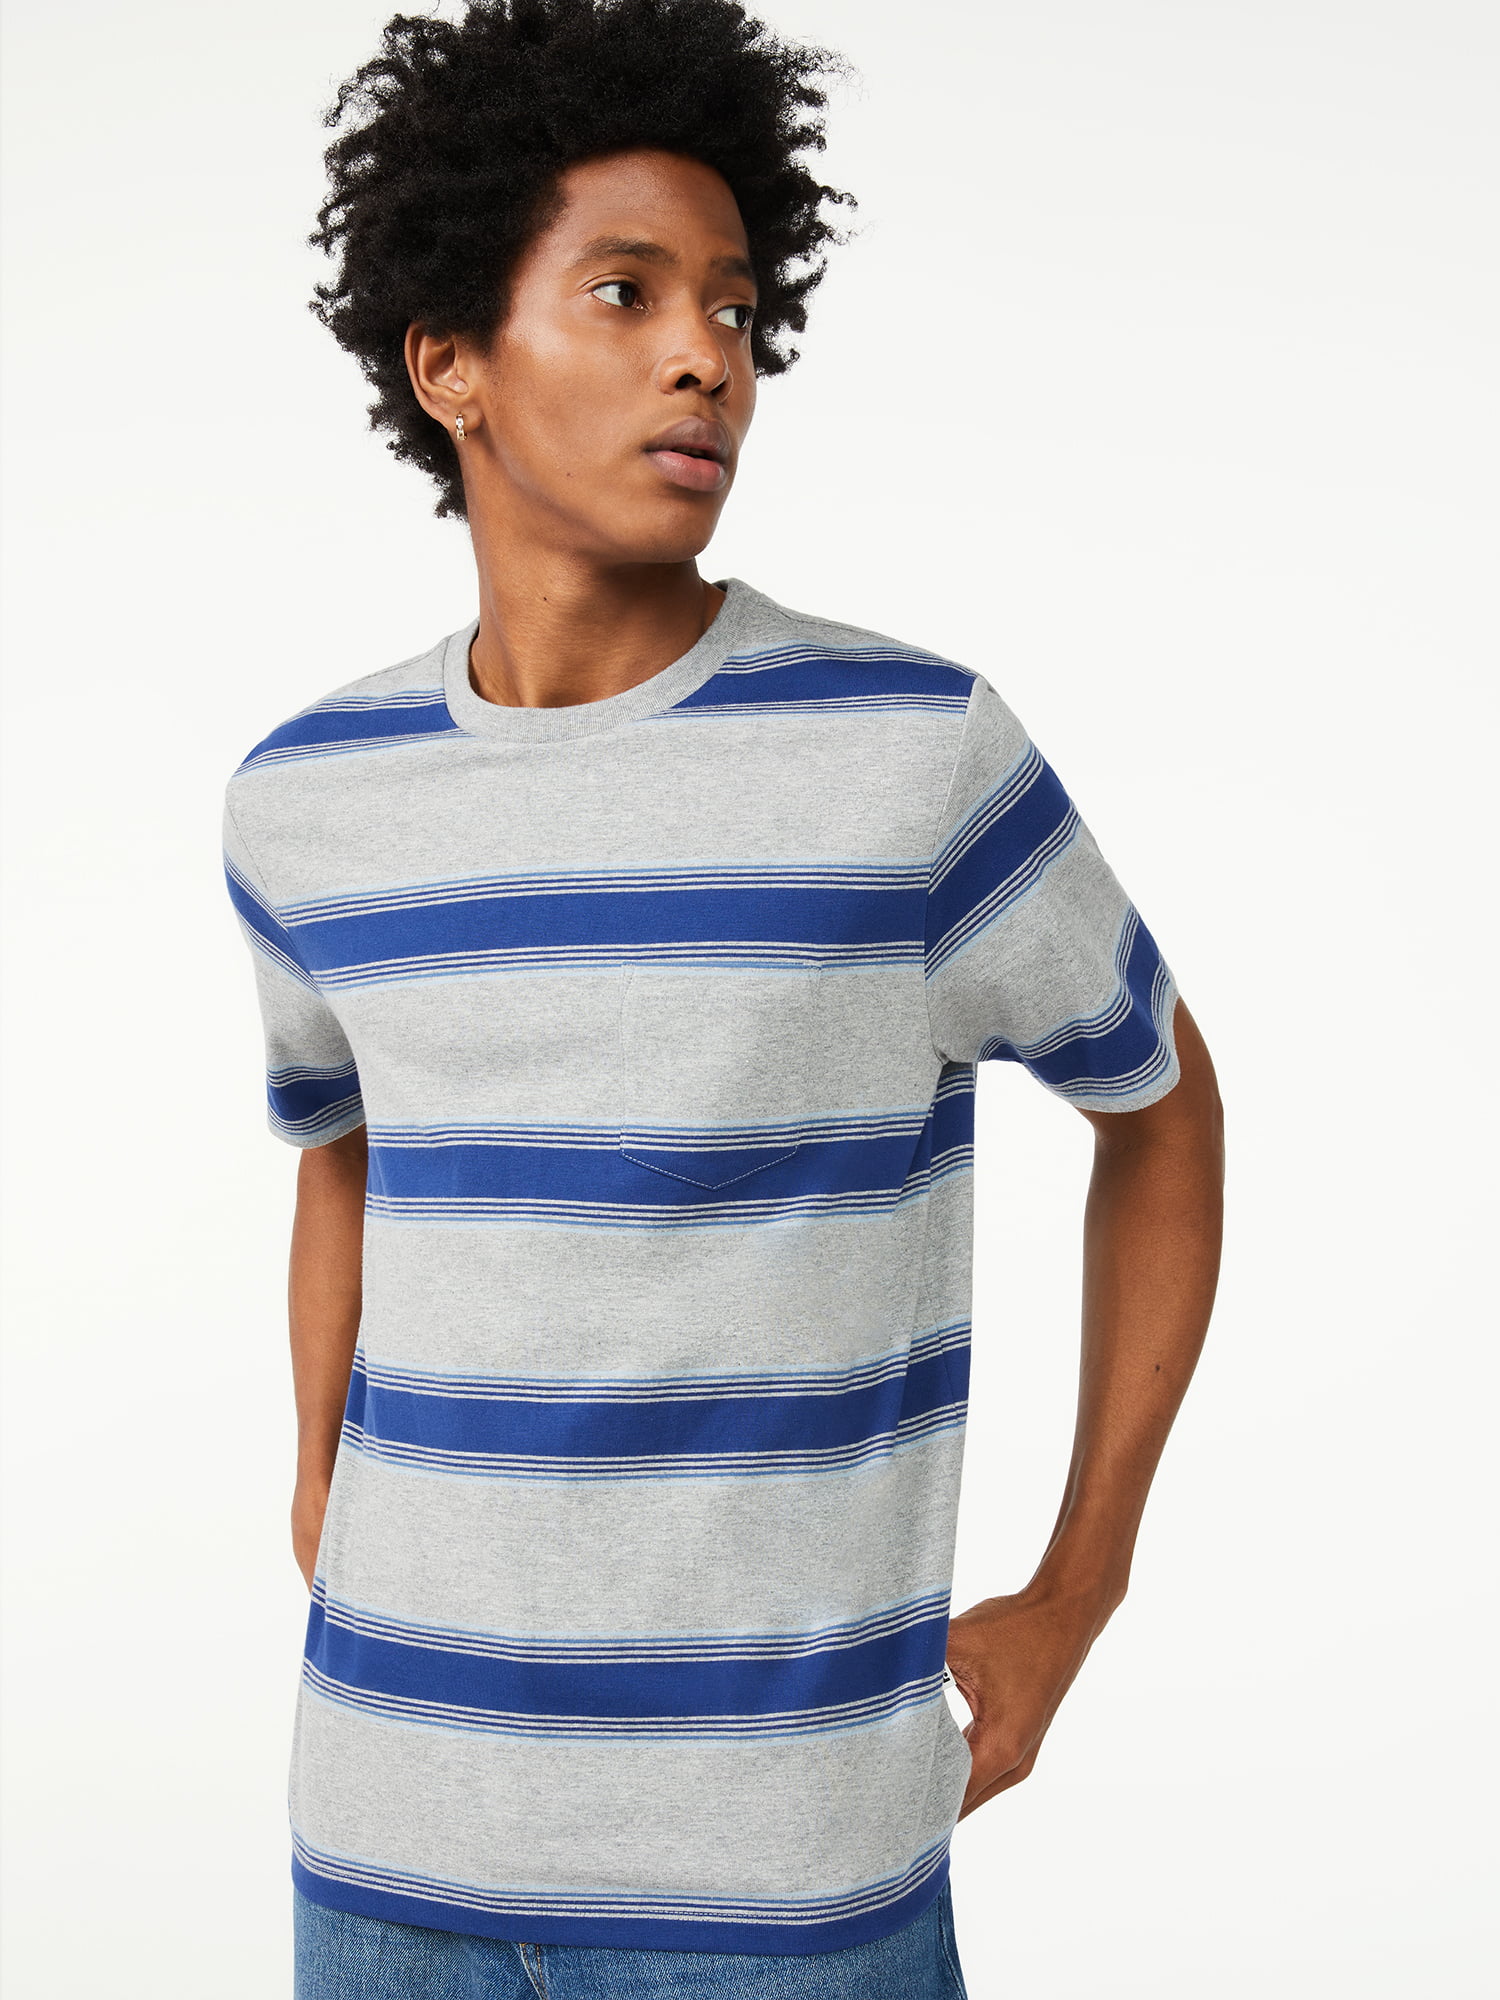 Free Assembly Men's Short Sleeve Striped Pocket T-Shirt - Walmart.com